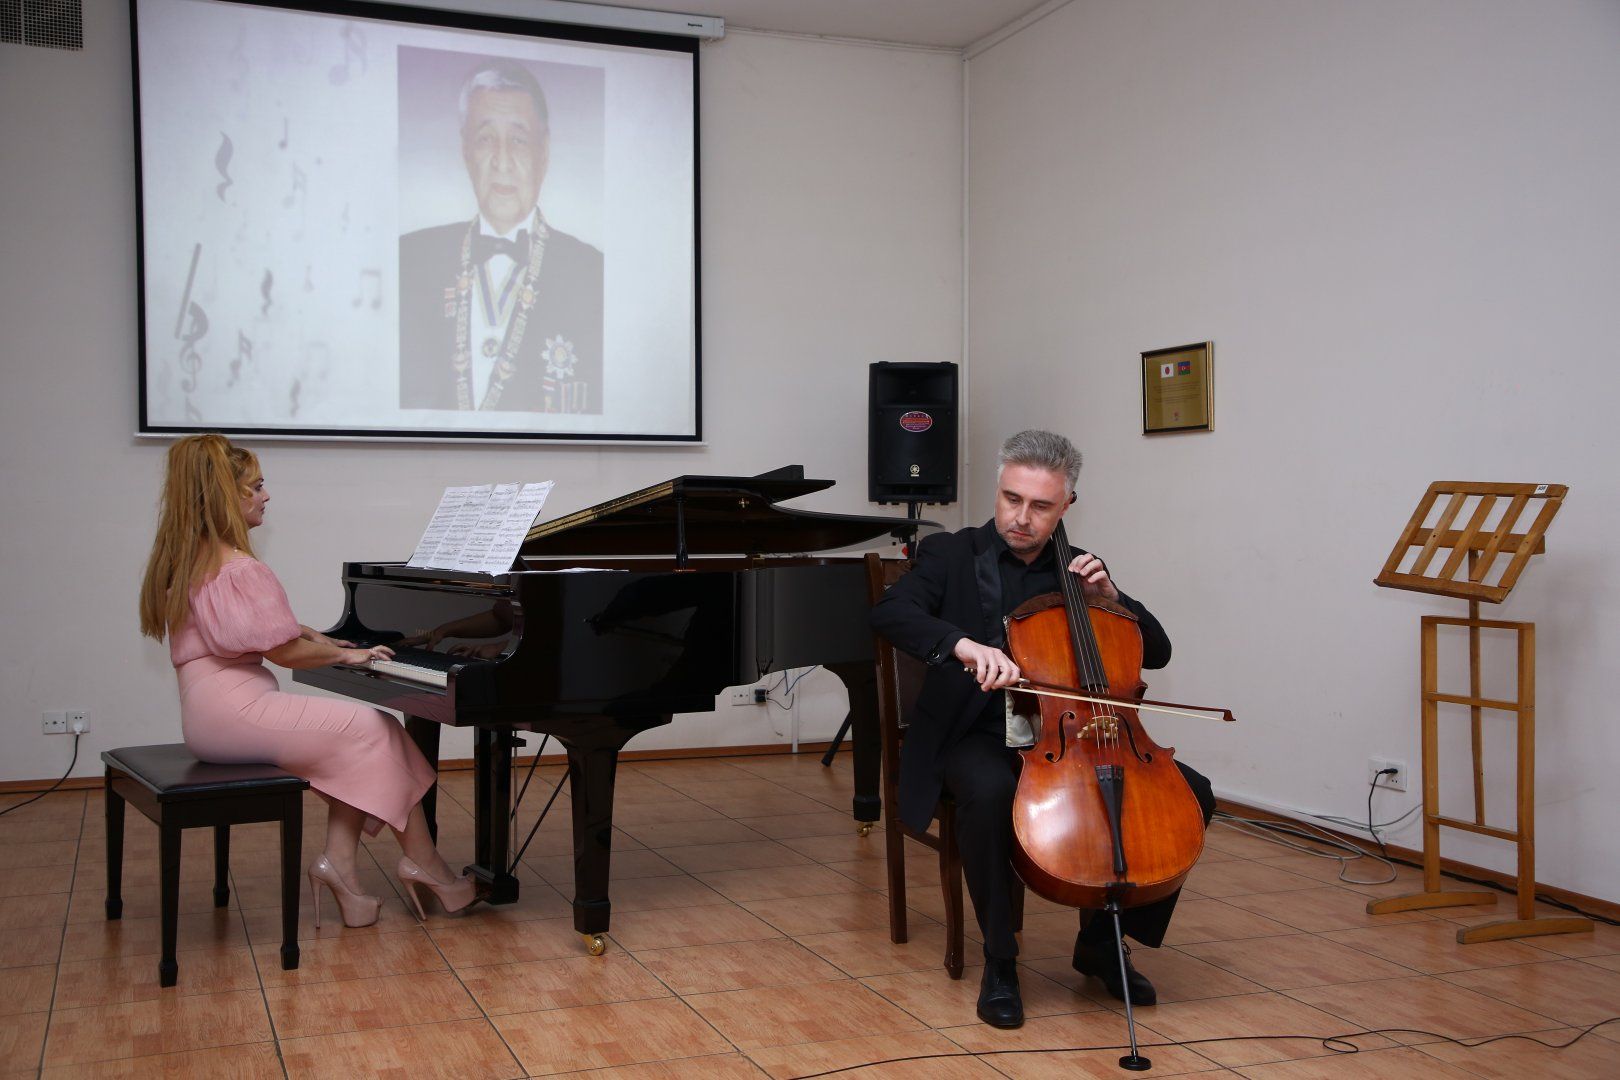 Baku Music Academy celebrates anniversary of prominent composer [PHOTOS]